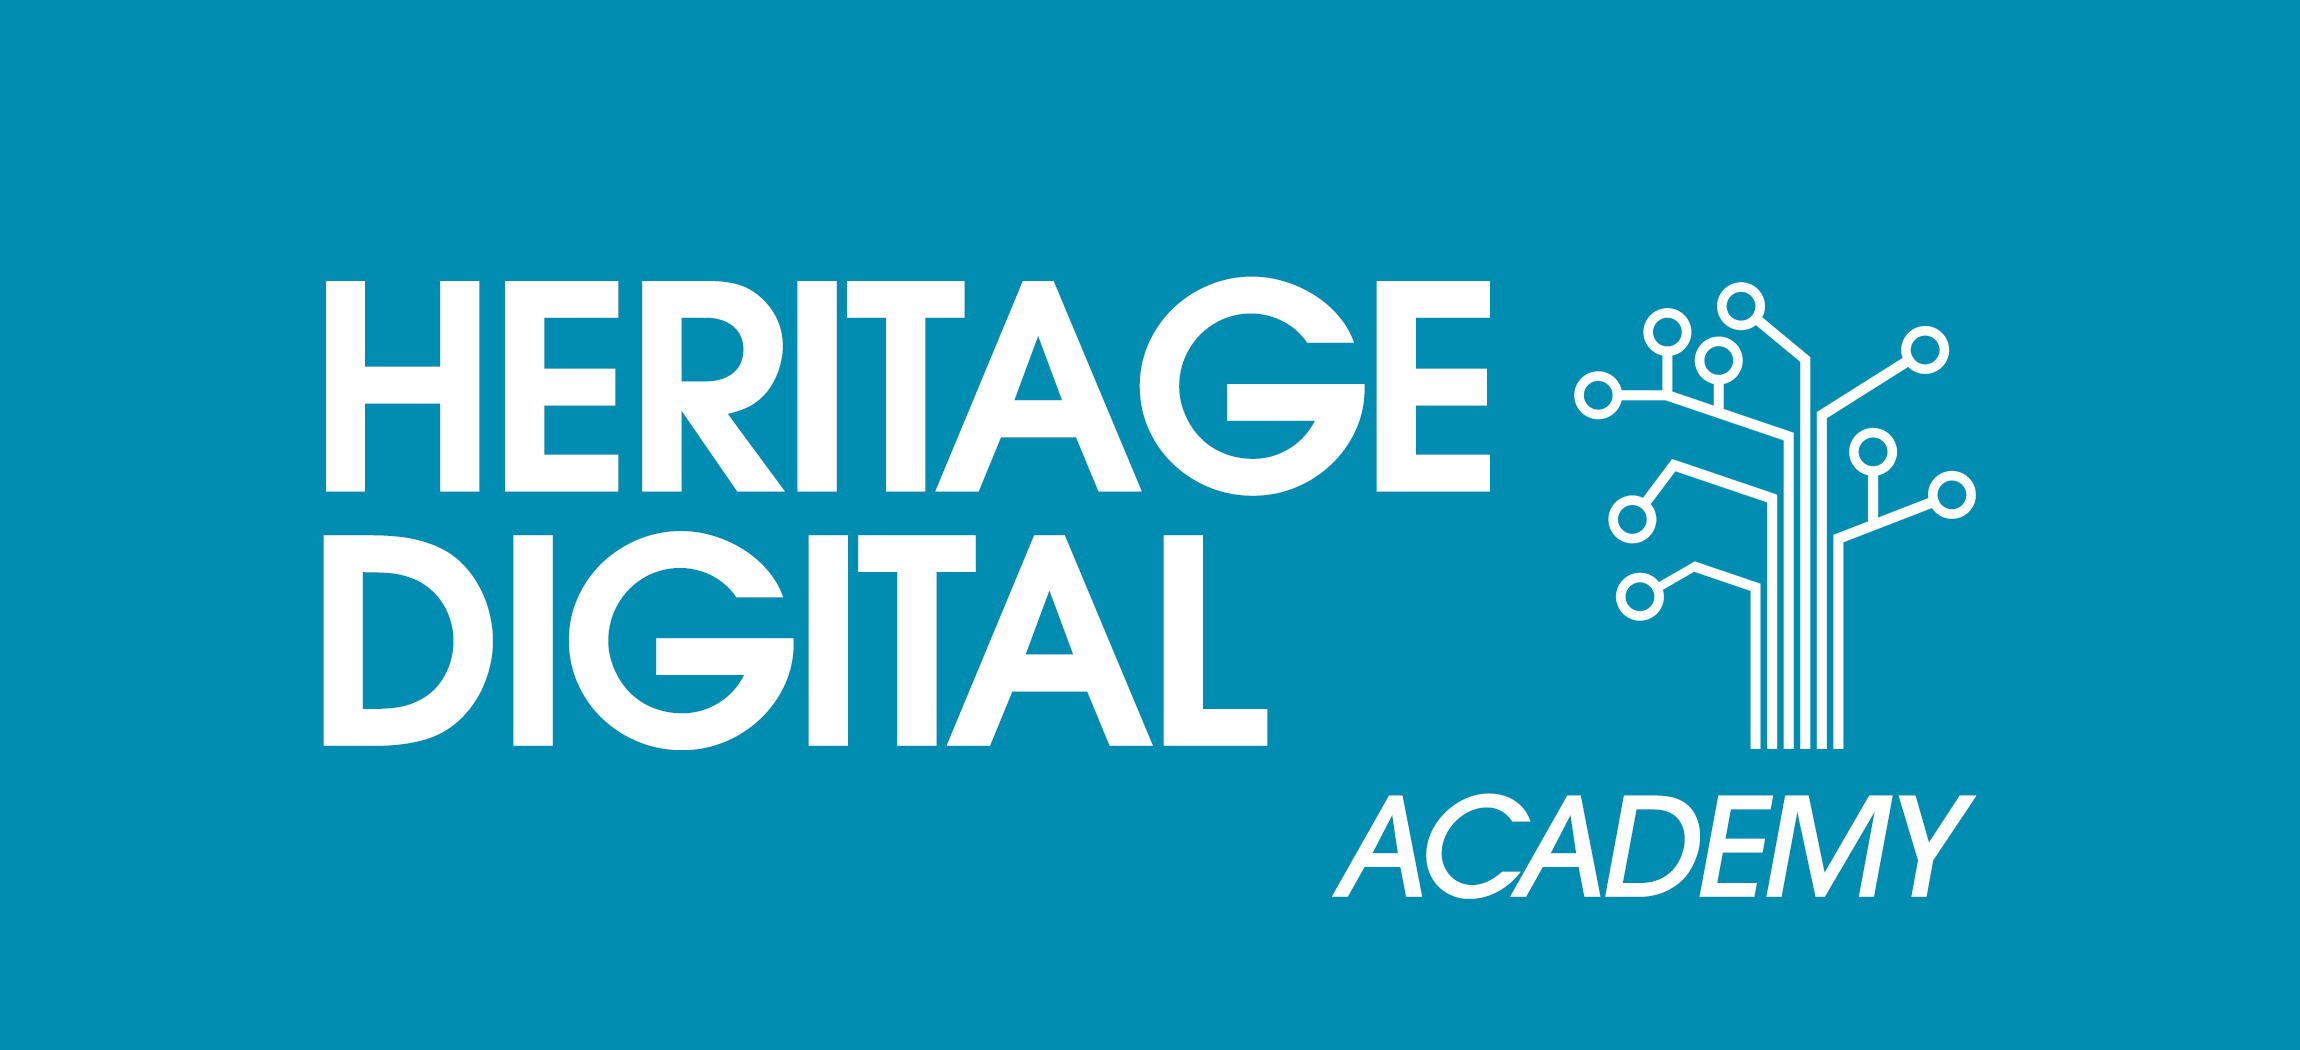 Heritage Digital Academy